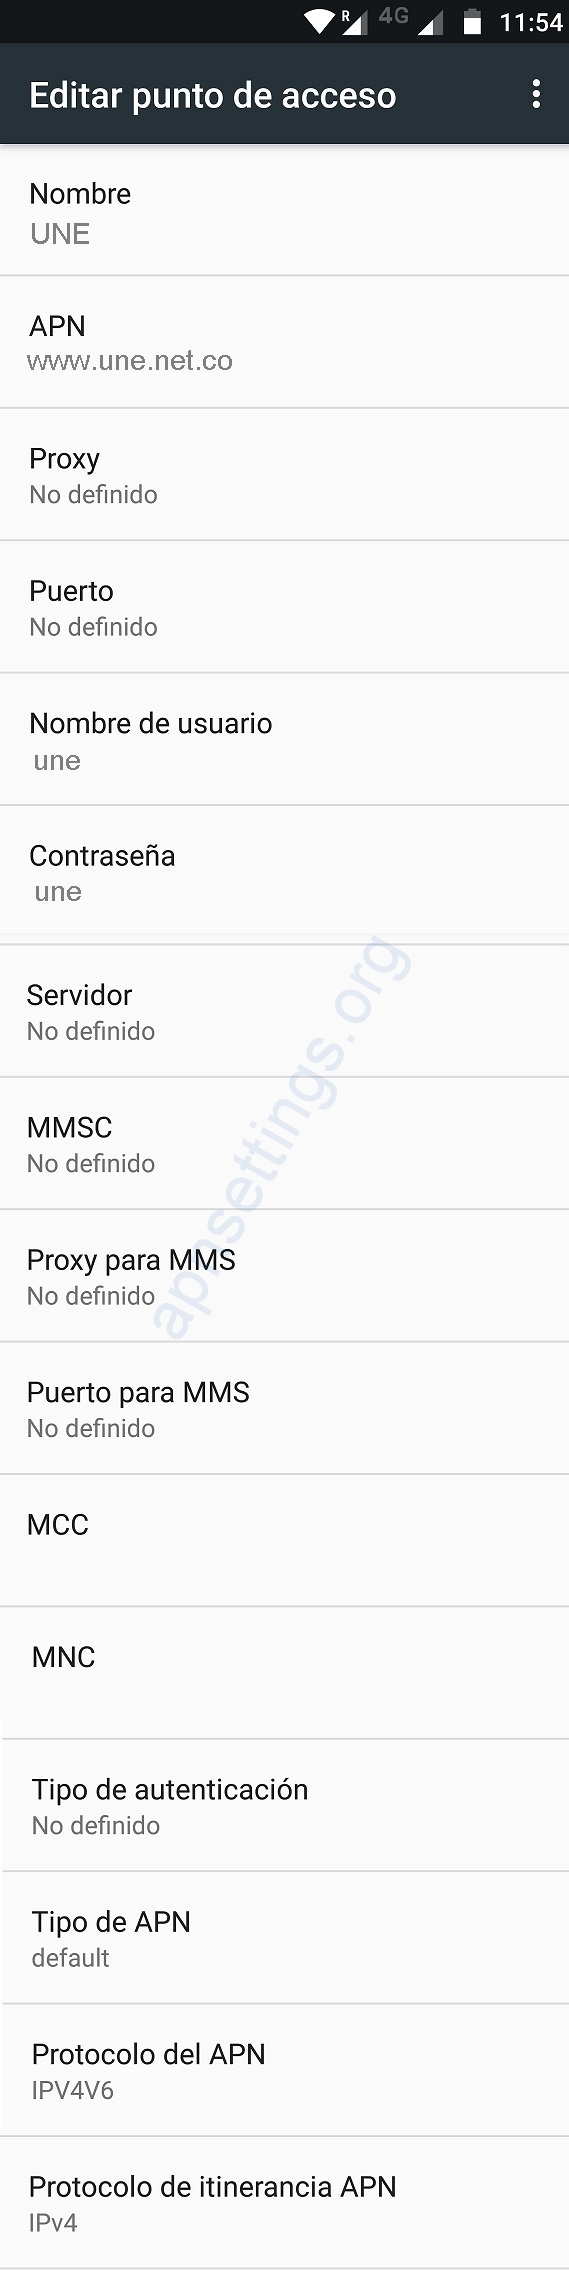 Configurar APN de UNE 4G LTE Colombia